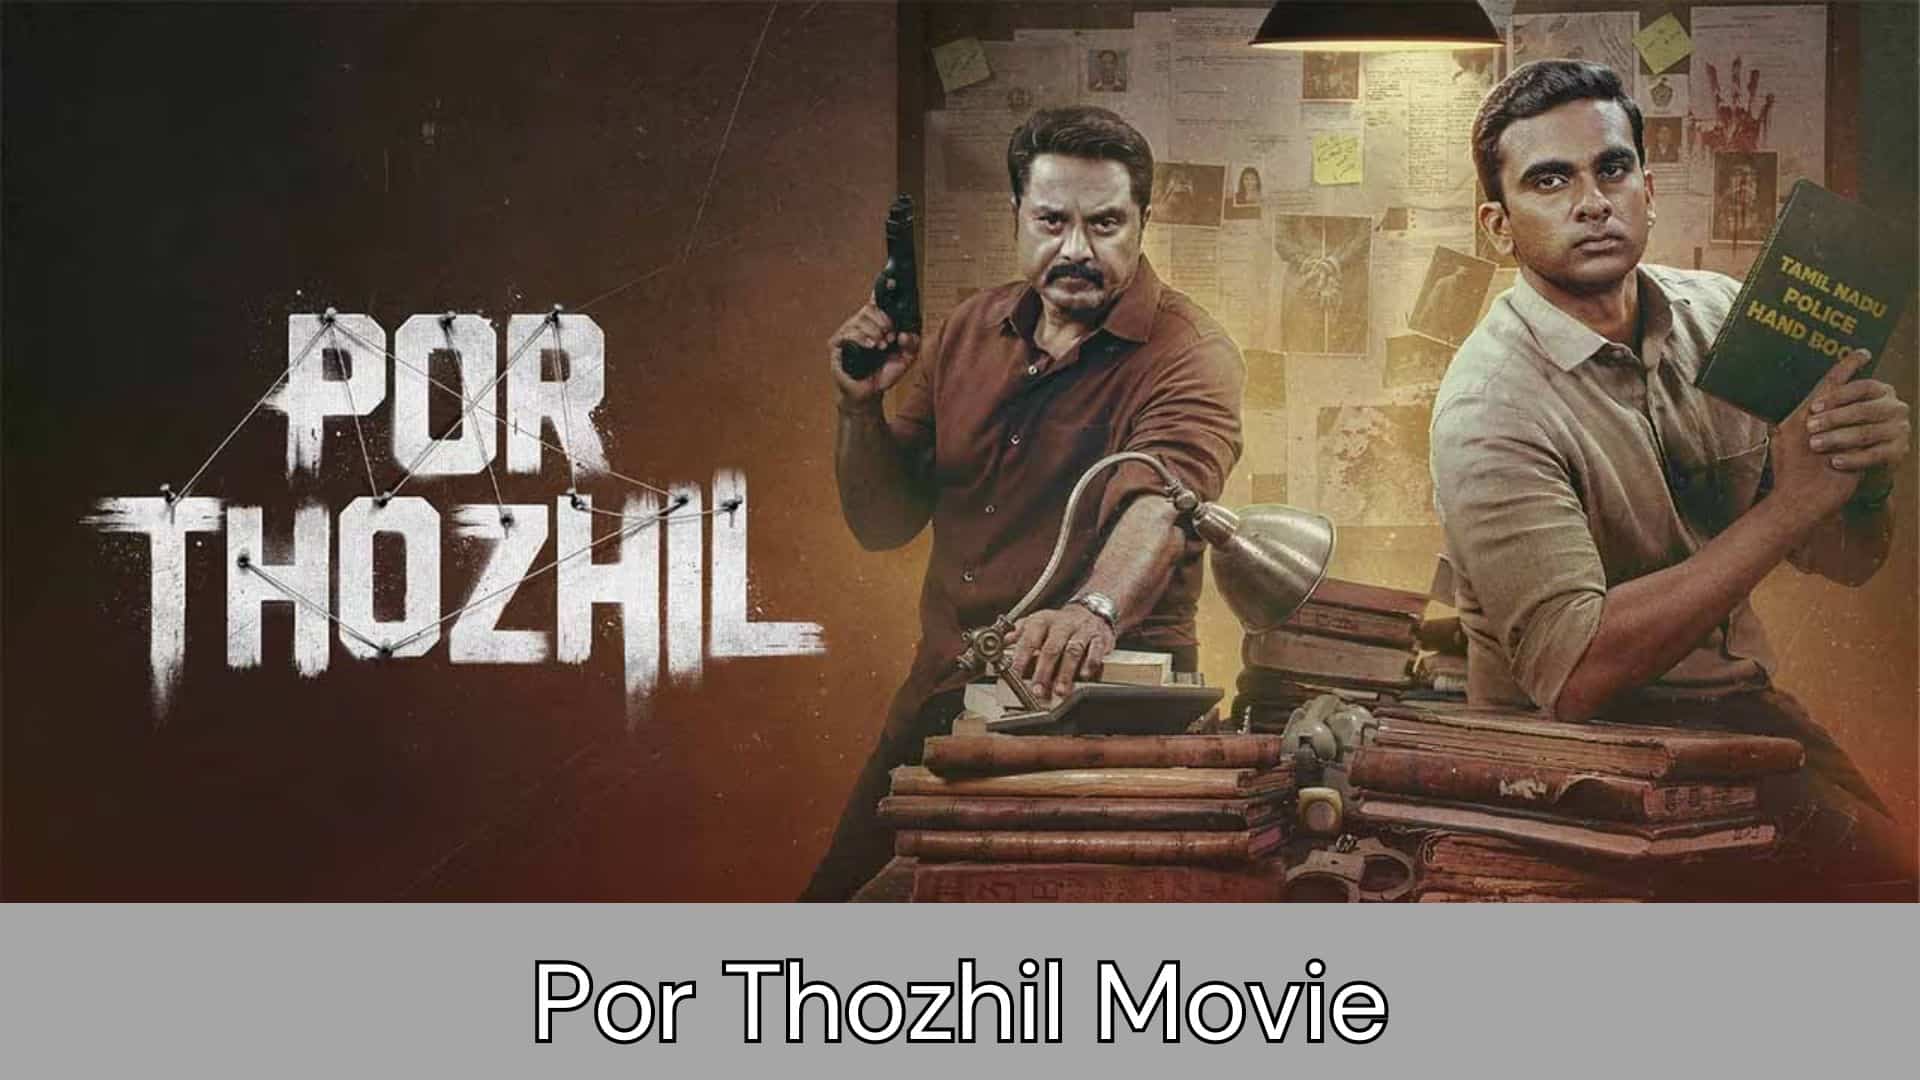 Por Thozhil Movie Download telegram link, kuttymovies, isaimini, filmyzilla, masstamilian, tamilrockers